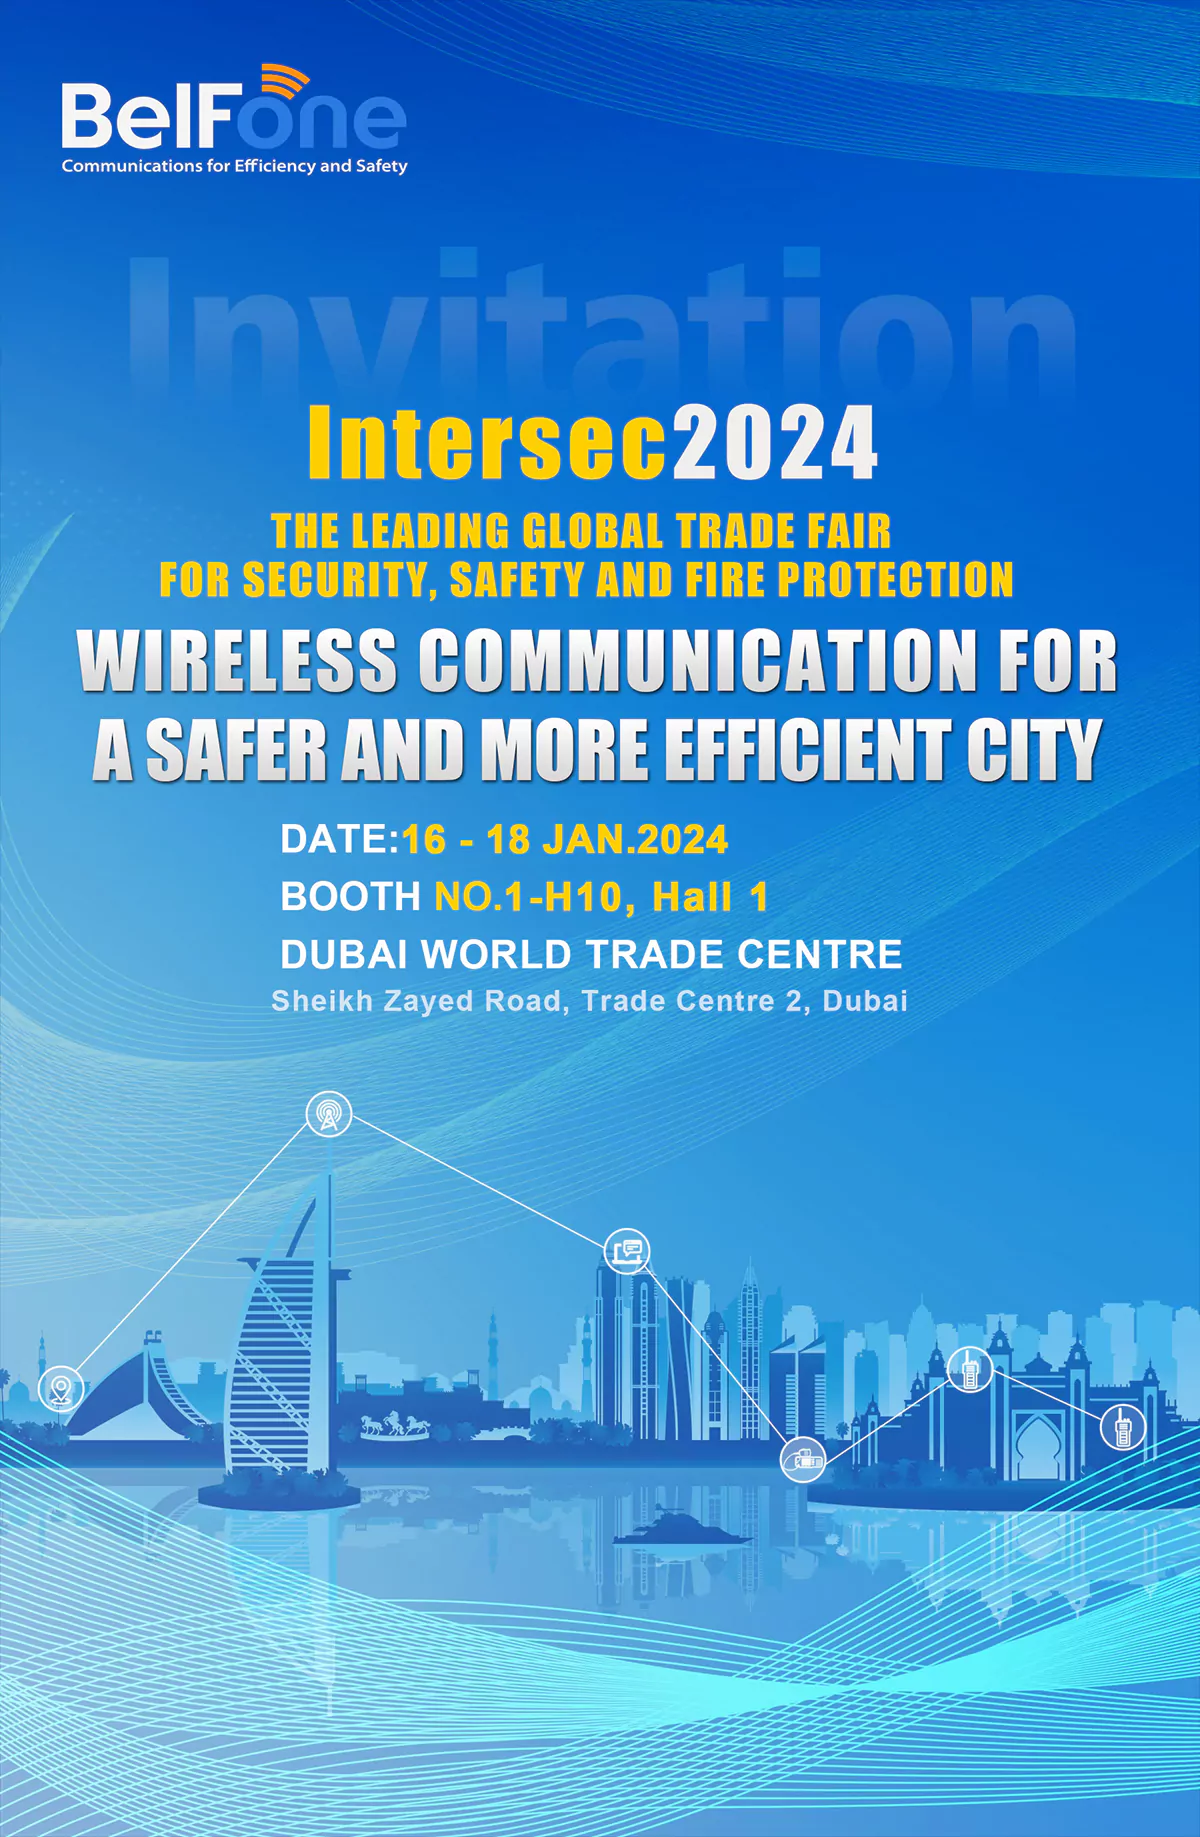 BelFone showcases wireless communication technology at Intersec 2024 Dubai